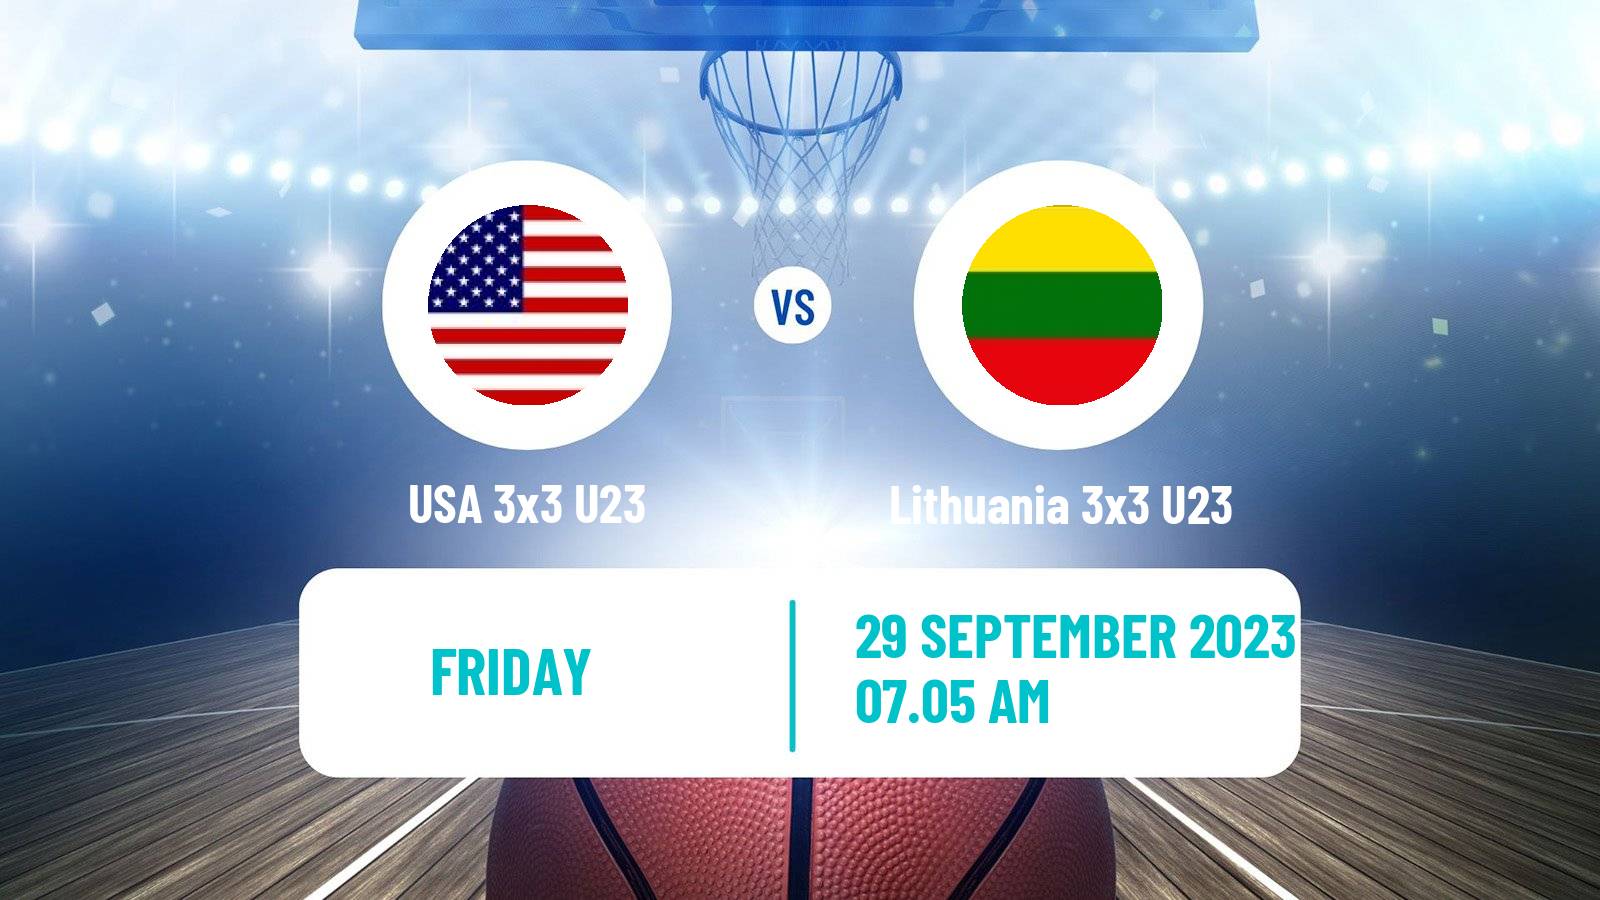 Basketball World Cup Basketball 3x3 U23 USA 3x3 U23 - Lithuania 3x3 U23